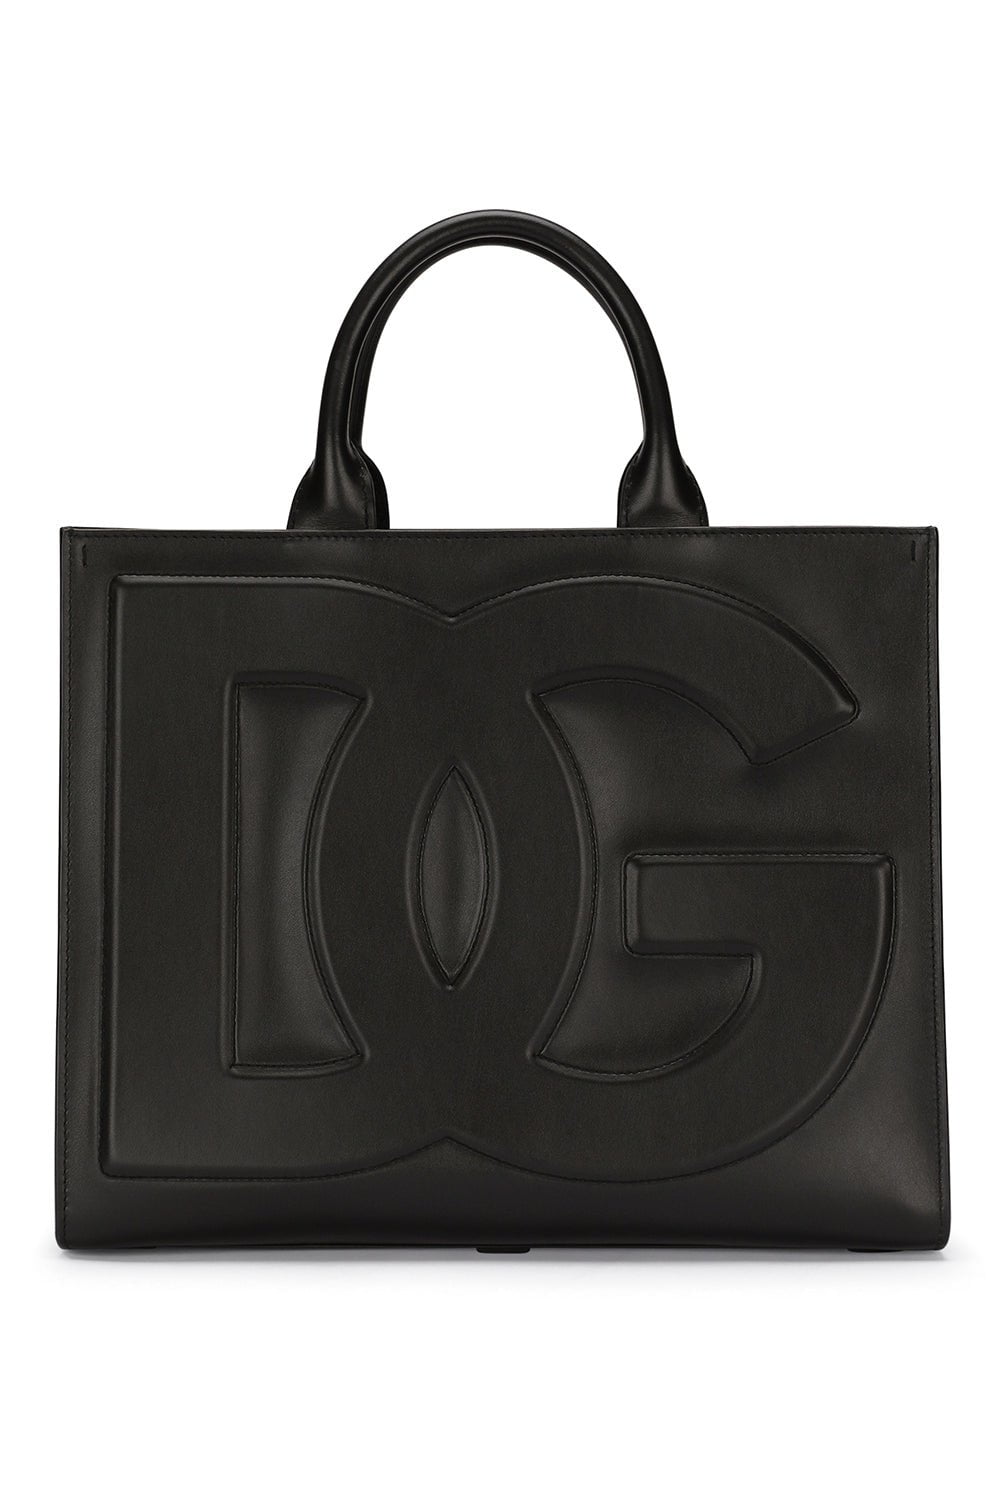 DOLCE & GABBANA-Small DG Logo Daily Shopper-BLACK